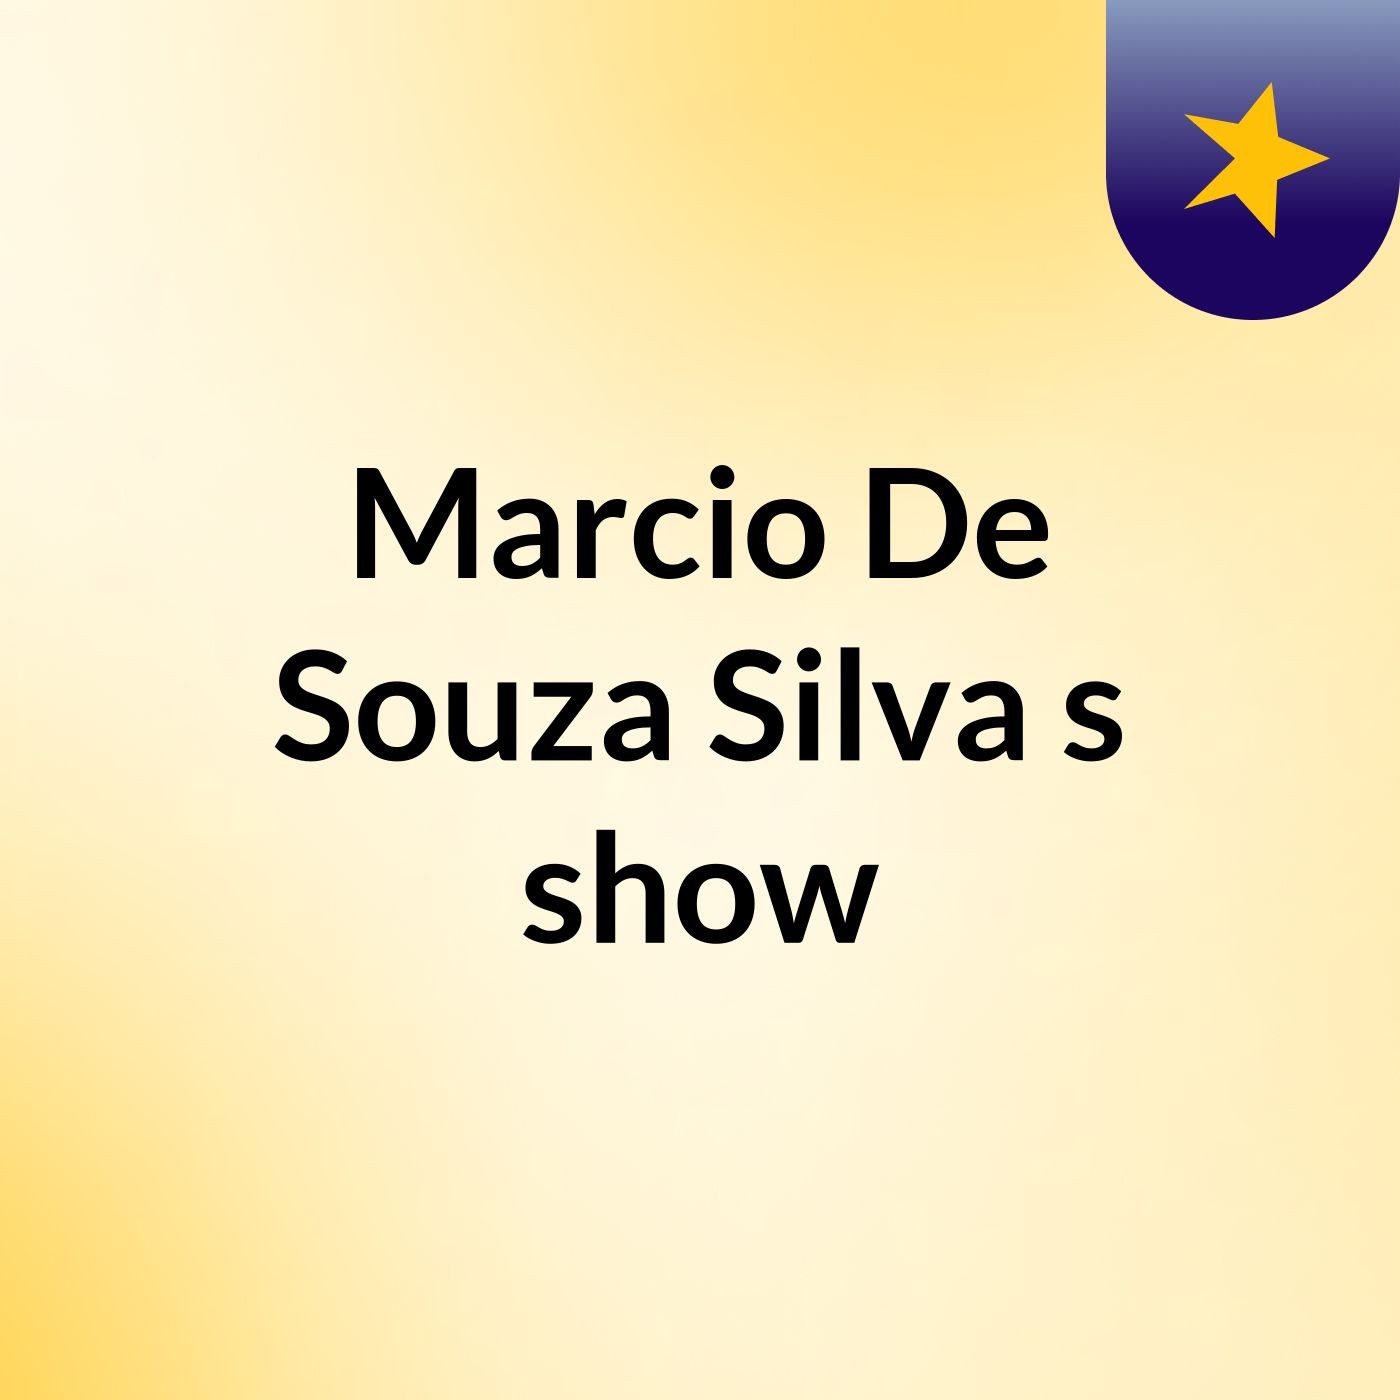 Marcio De Souza Silva's show